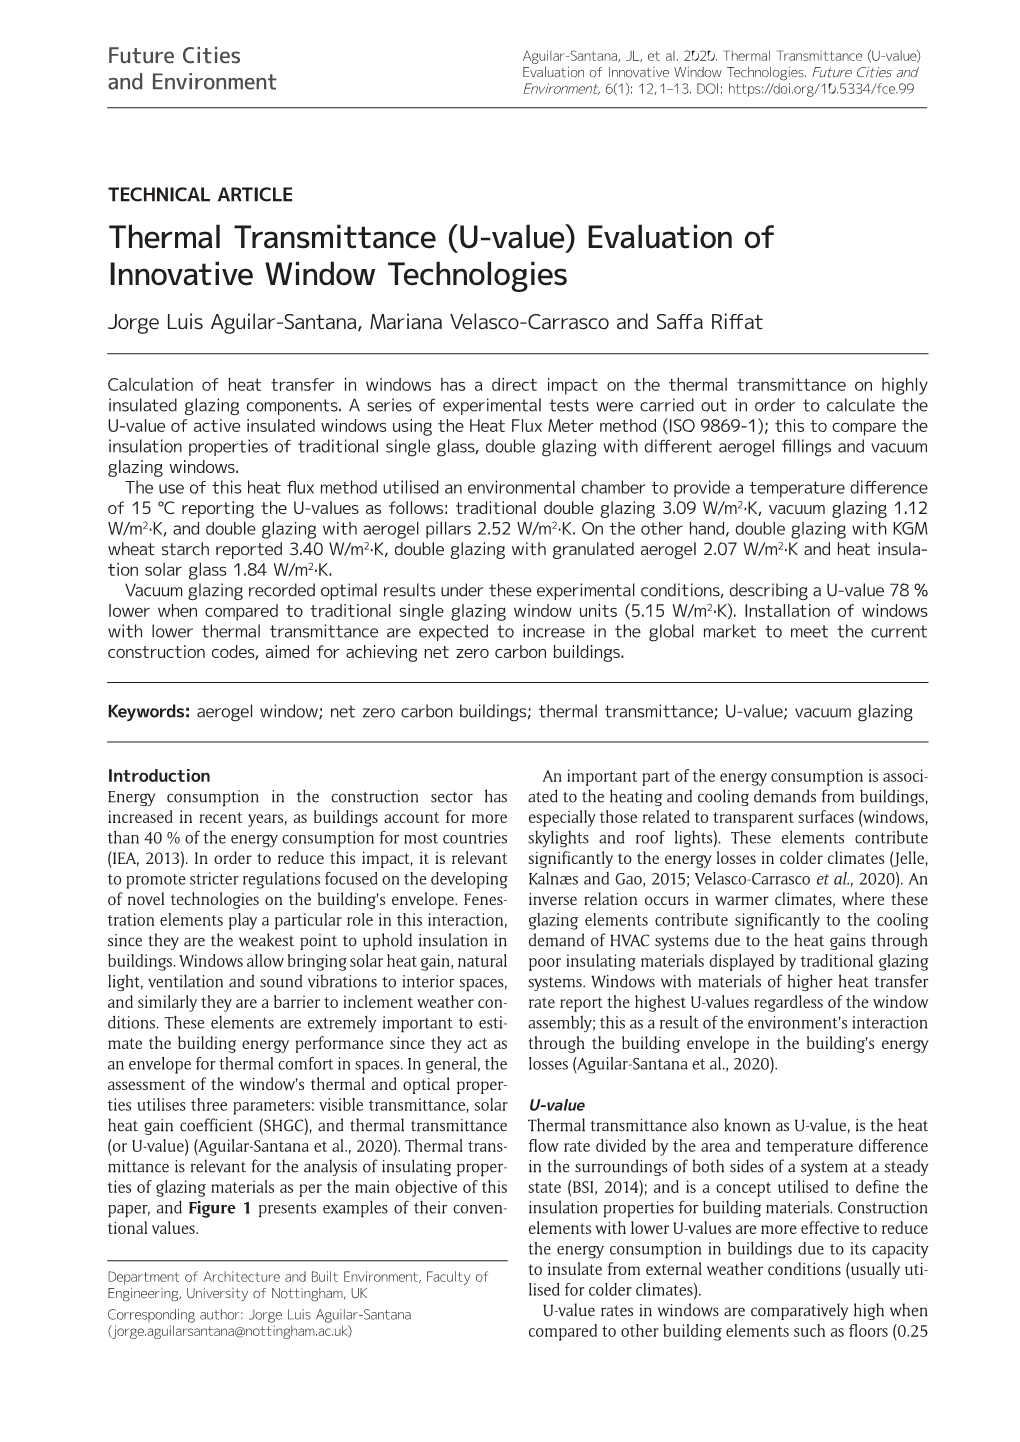 Thermal Transmittance (U-Value) Evaluation of Innovative Window Technologies